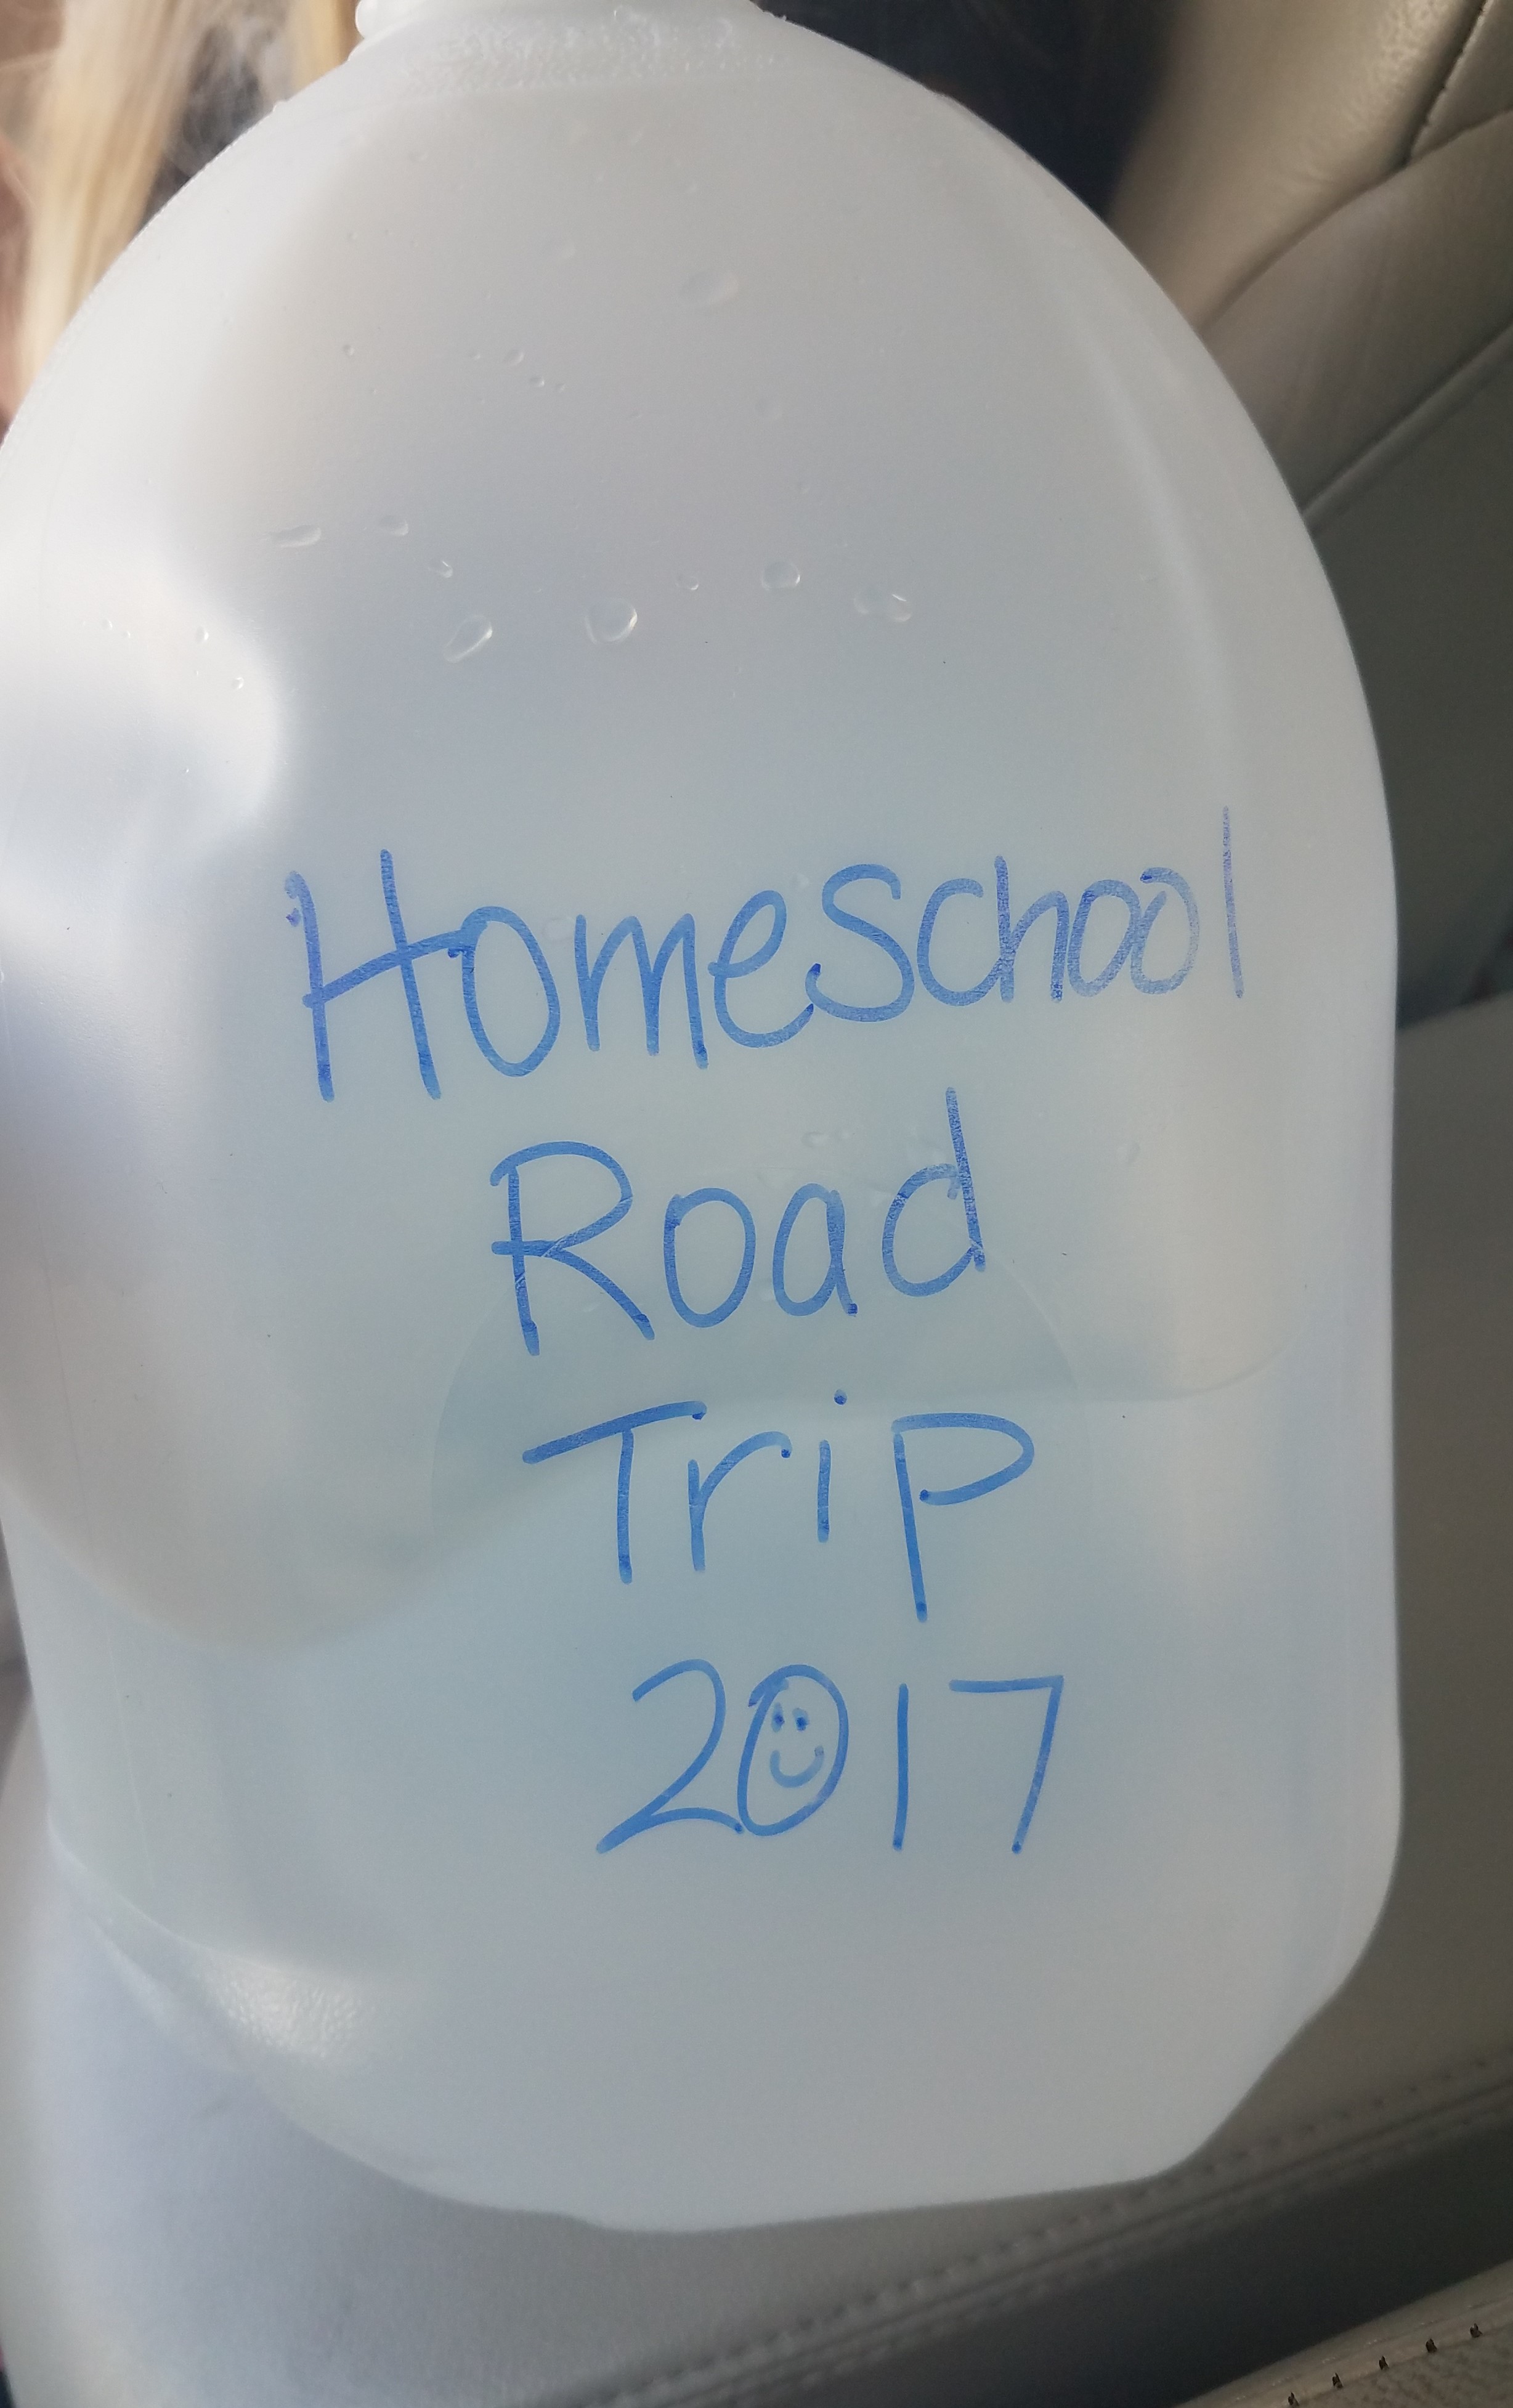 Homeschool Road Trip